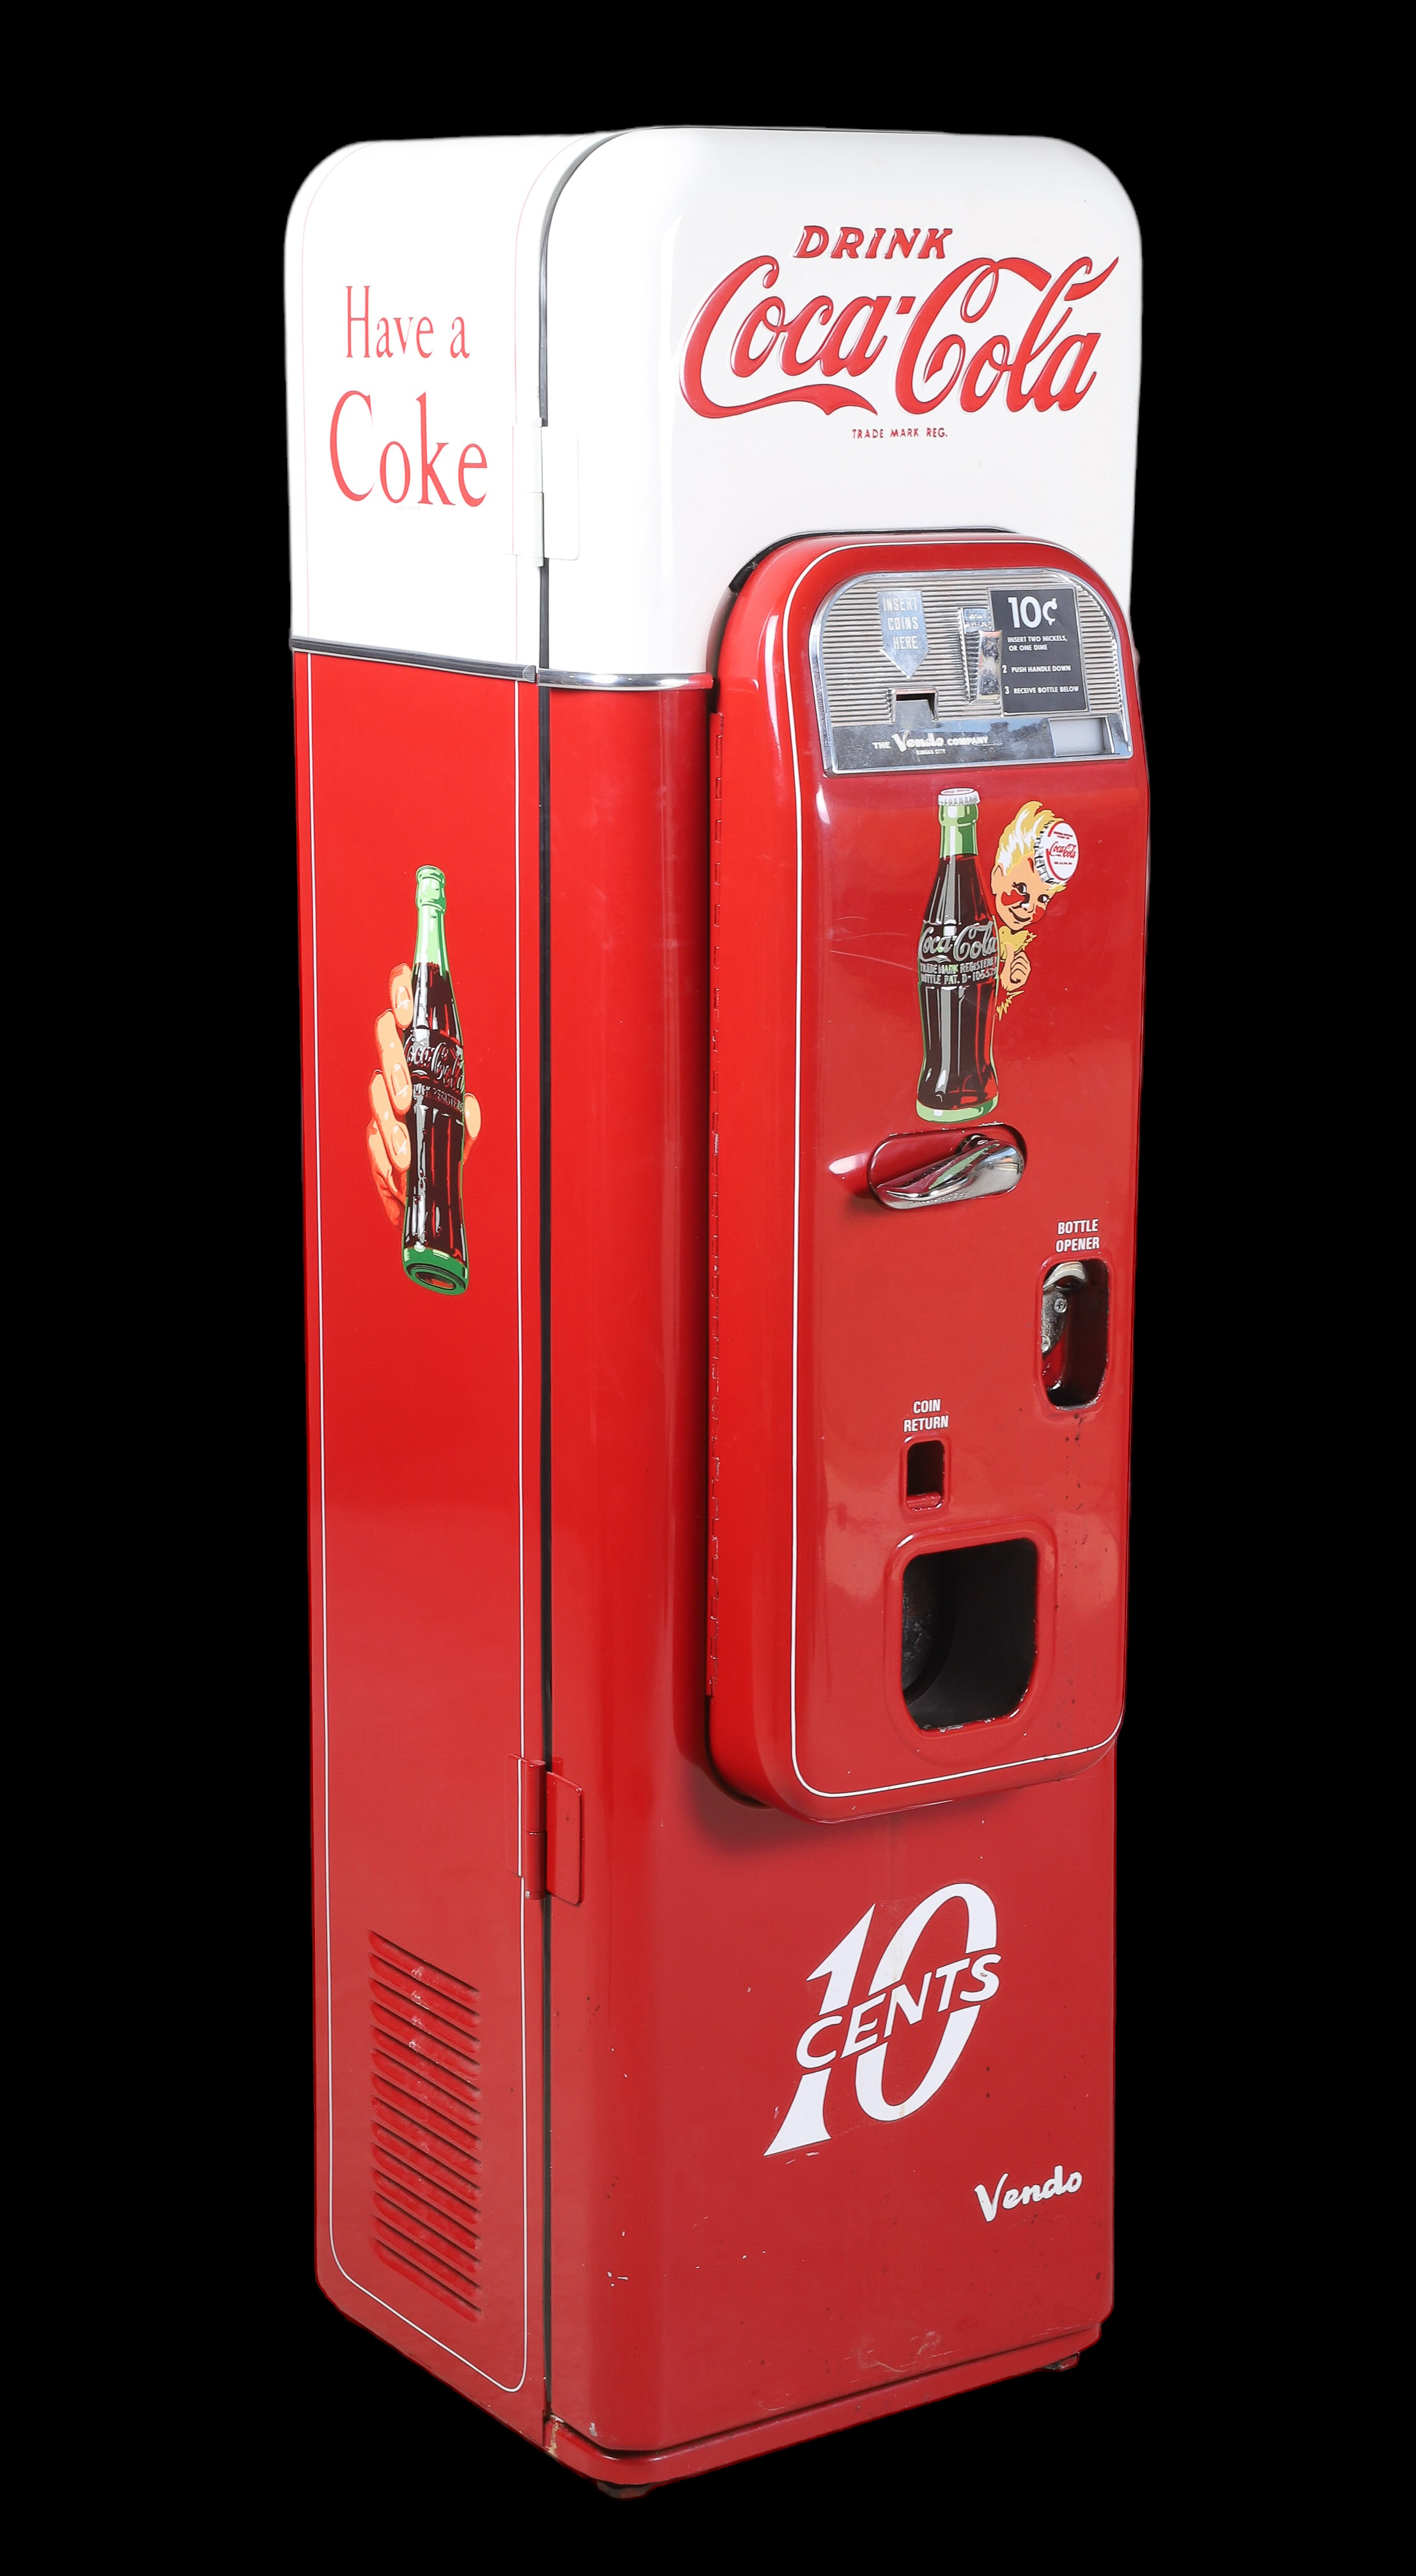 Model 44 Coca Cola 10 cent vending machine,